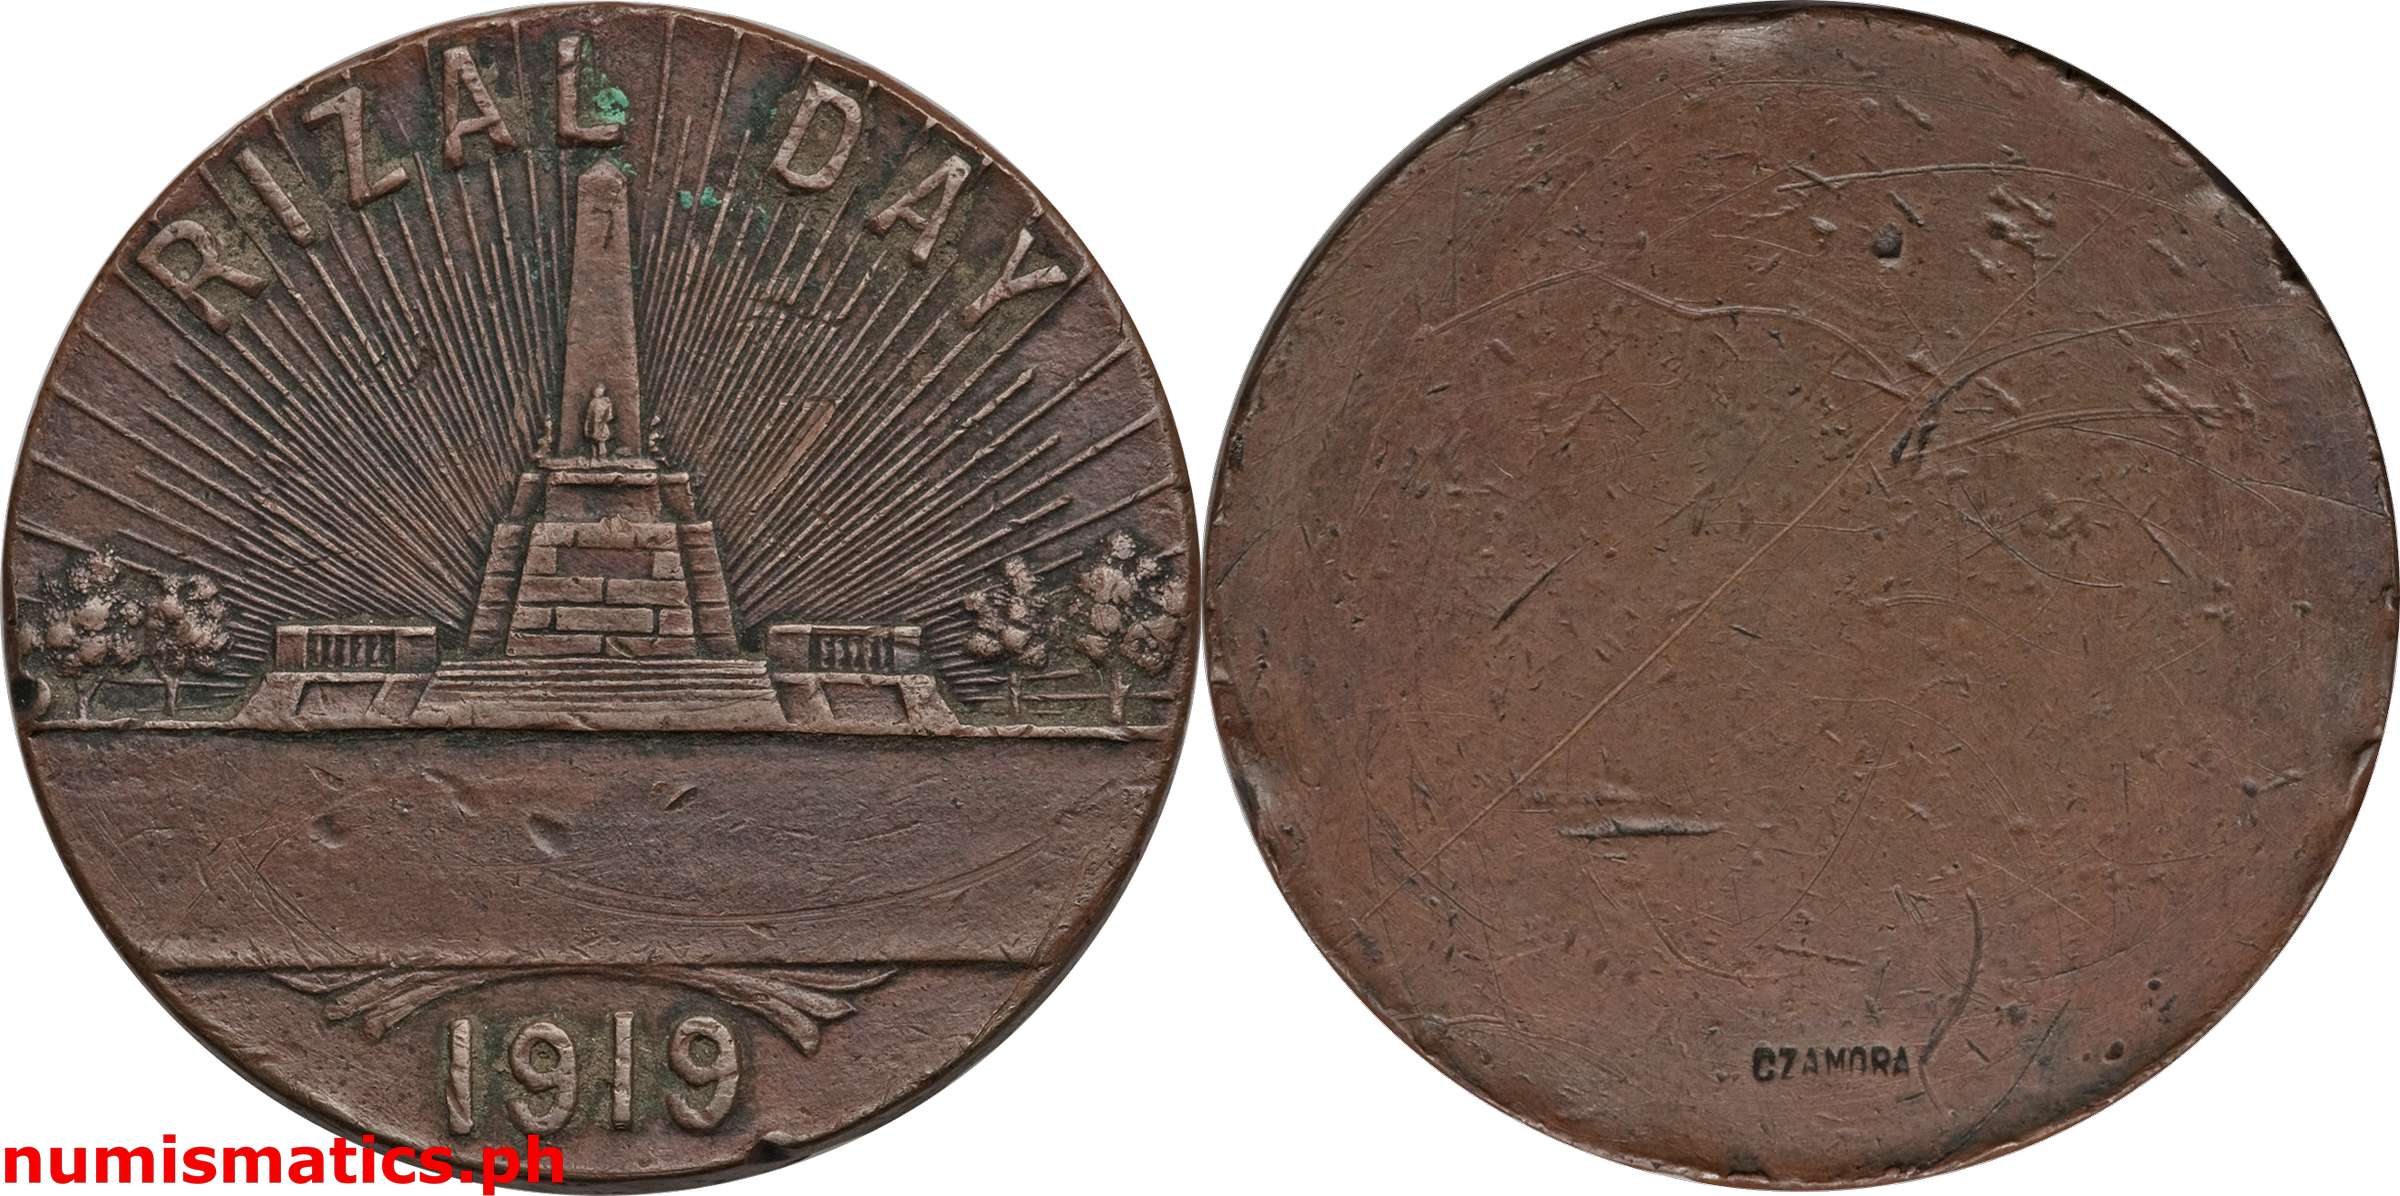 1919 Rizal Day Medal Bronze